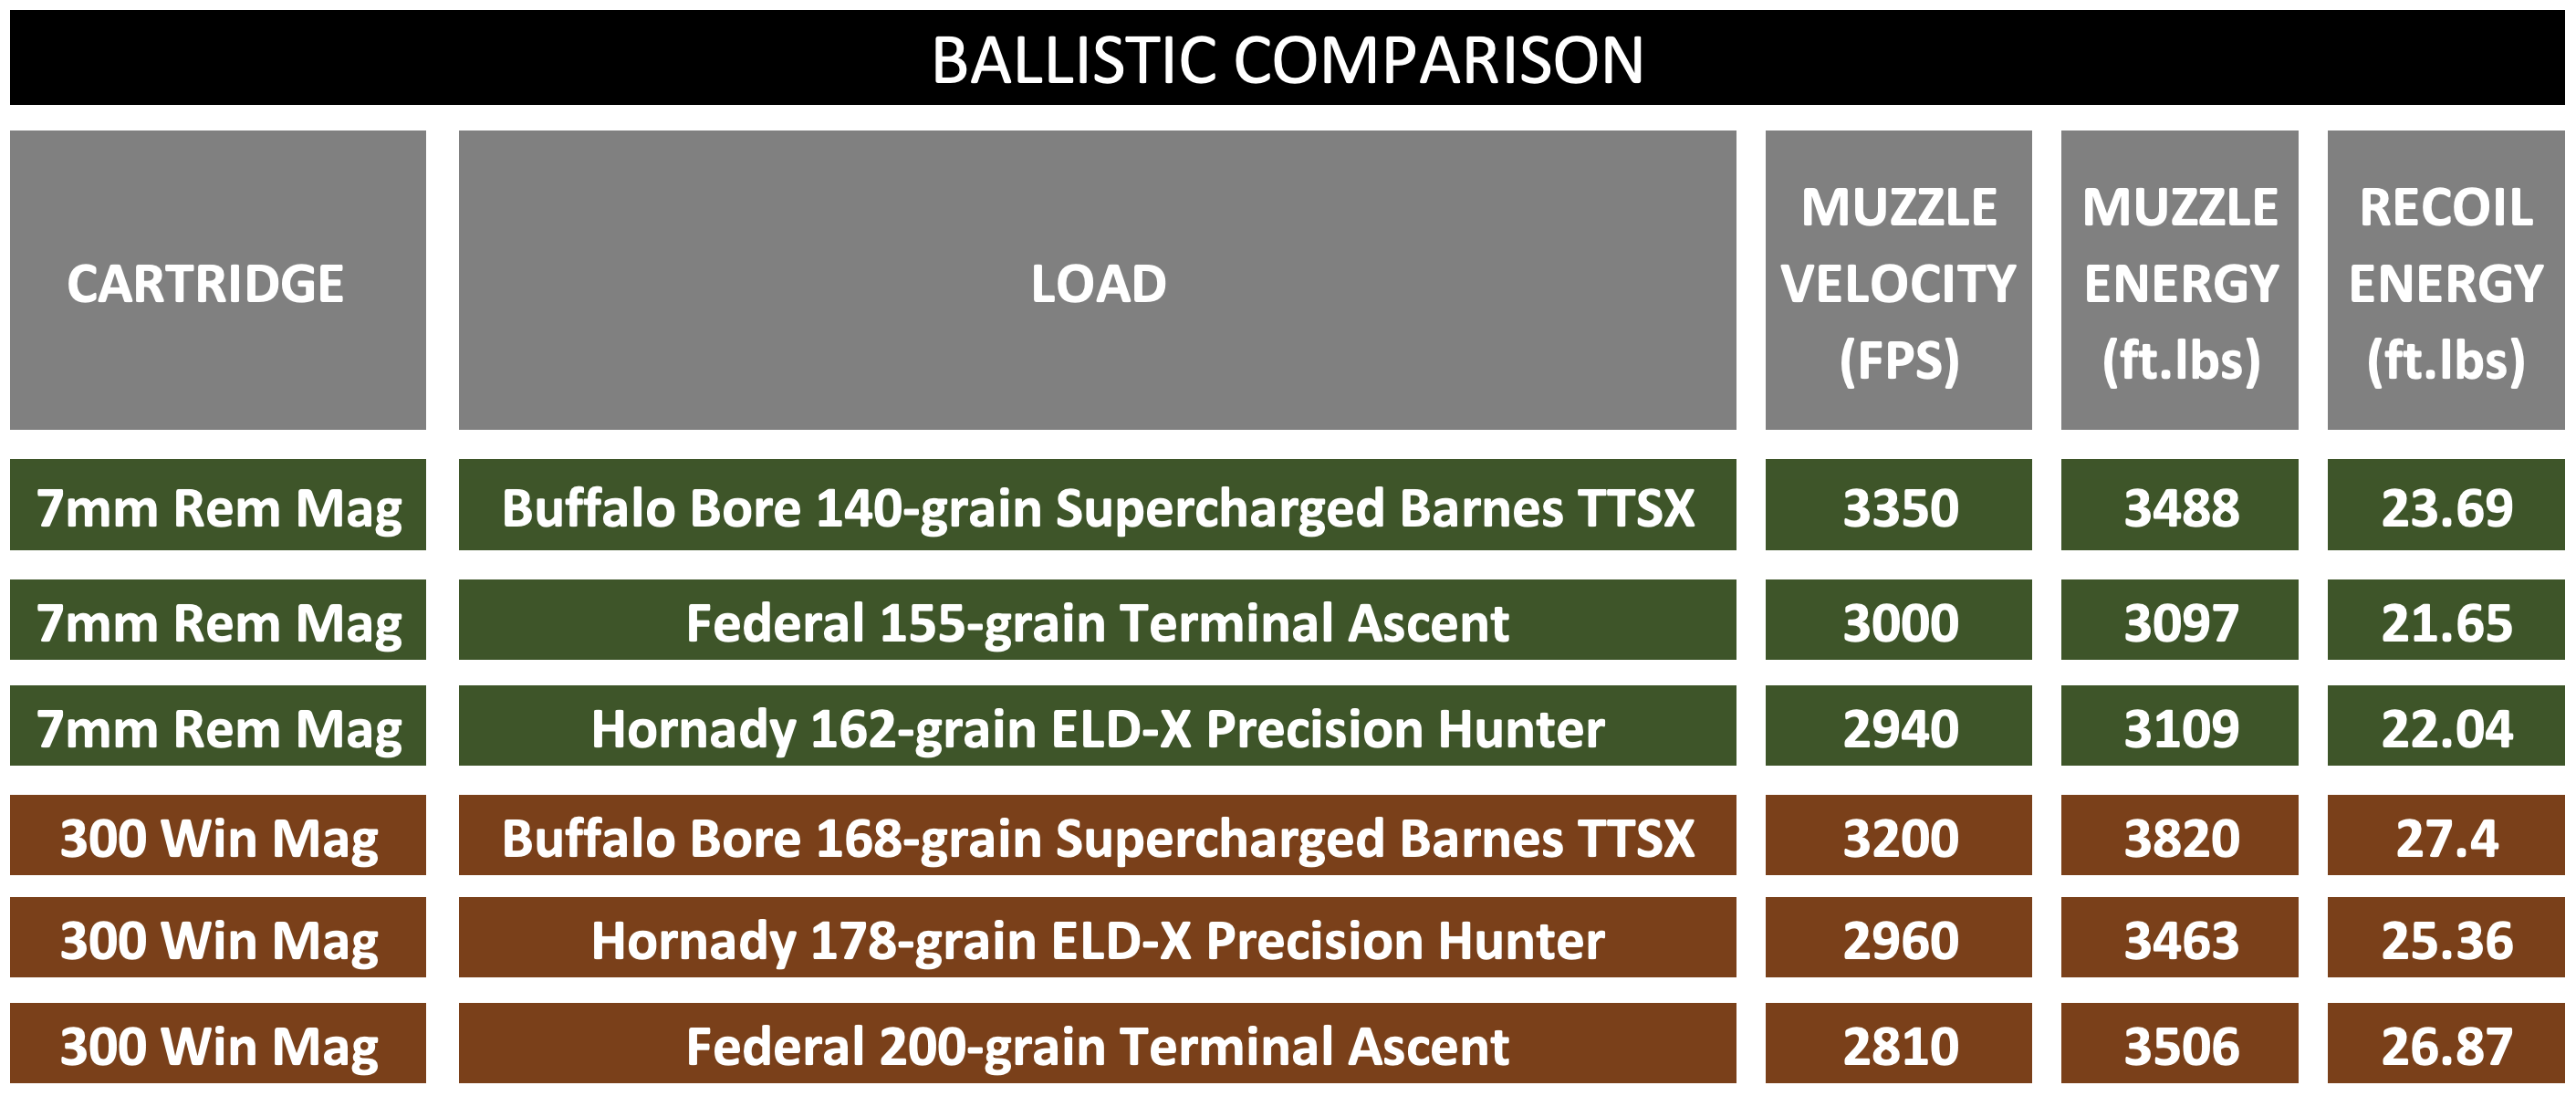 A chart comparing the ballistics of the 7mm Rem Mag vs 300 Win Mag